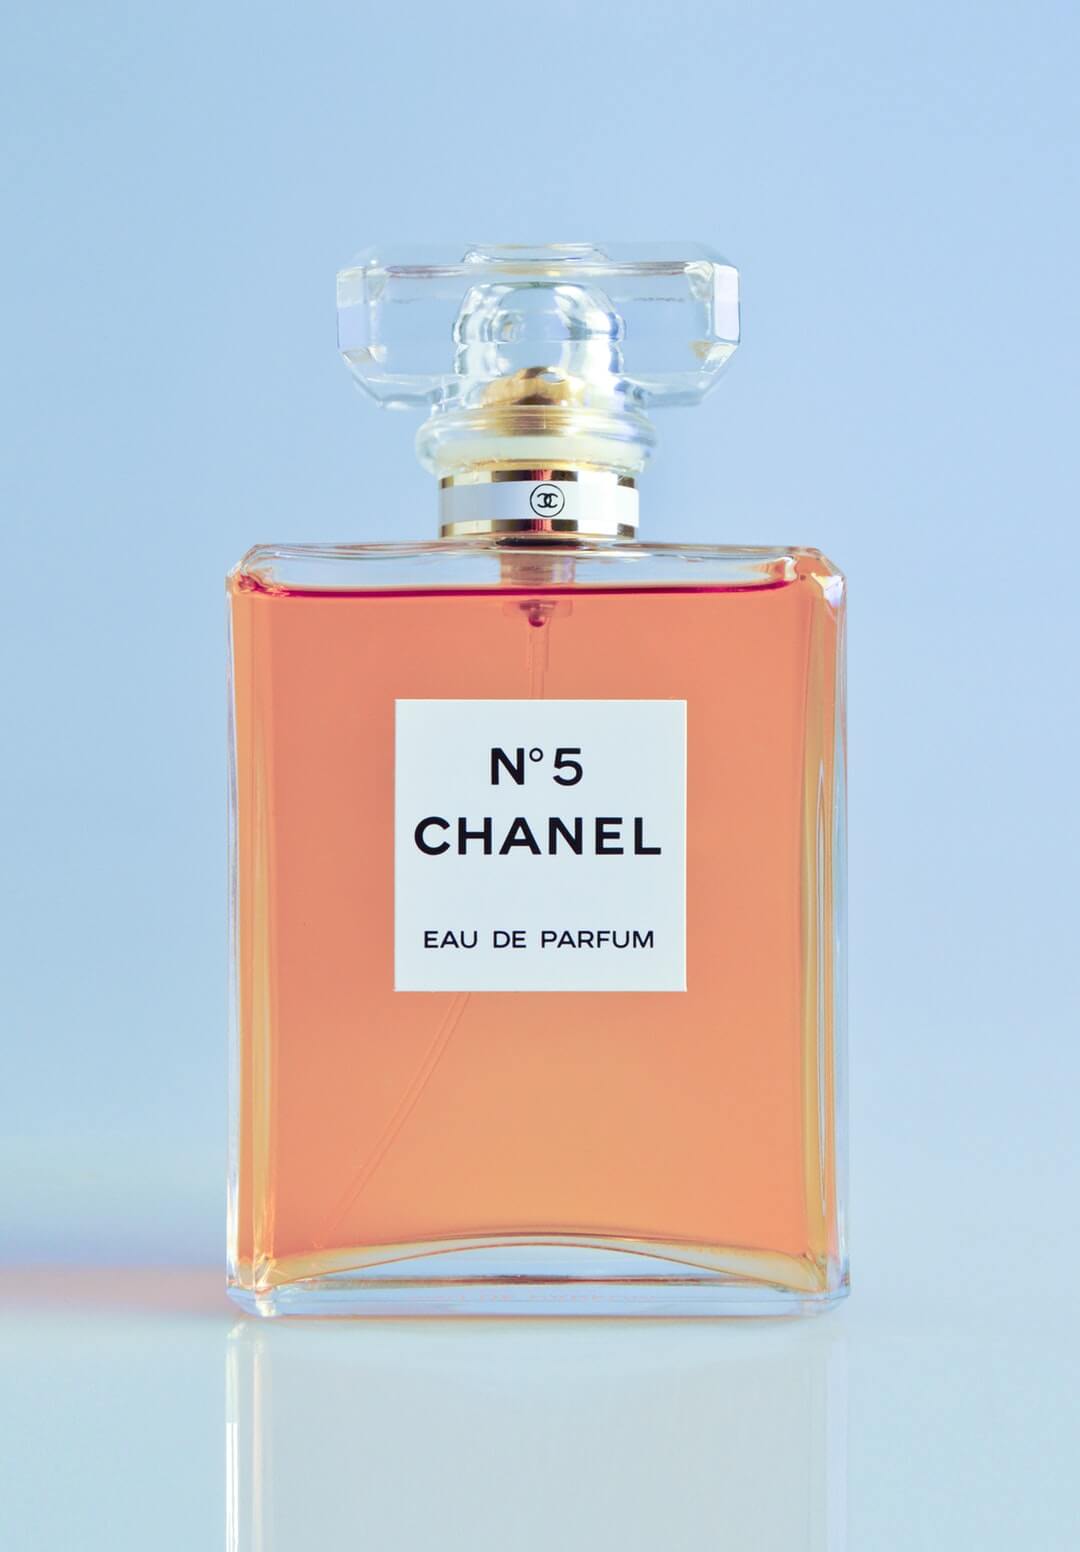 Chanel No 5 Perfume Bottle